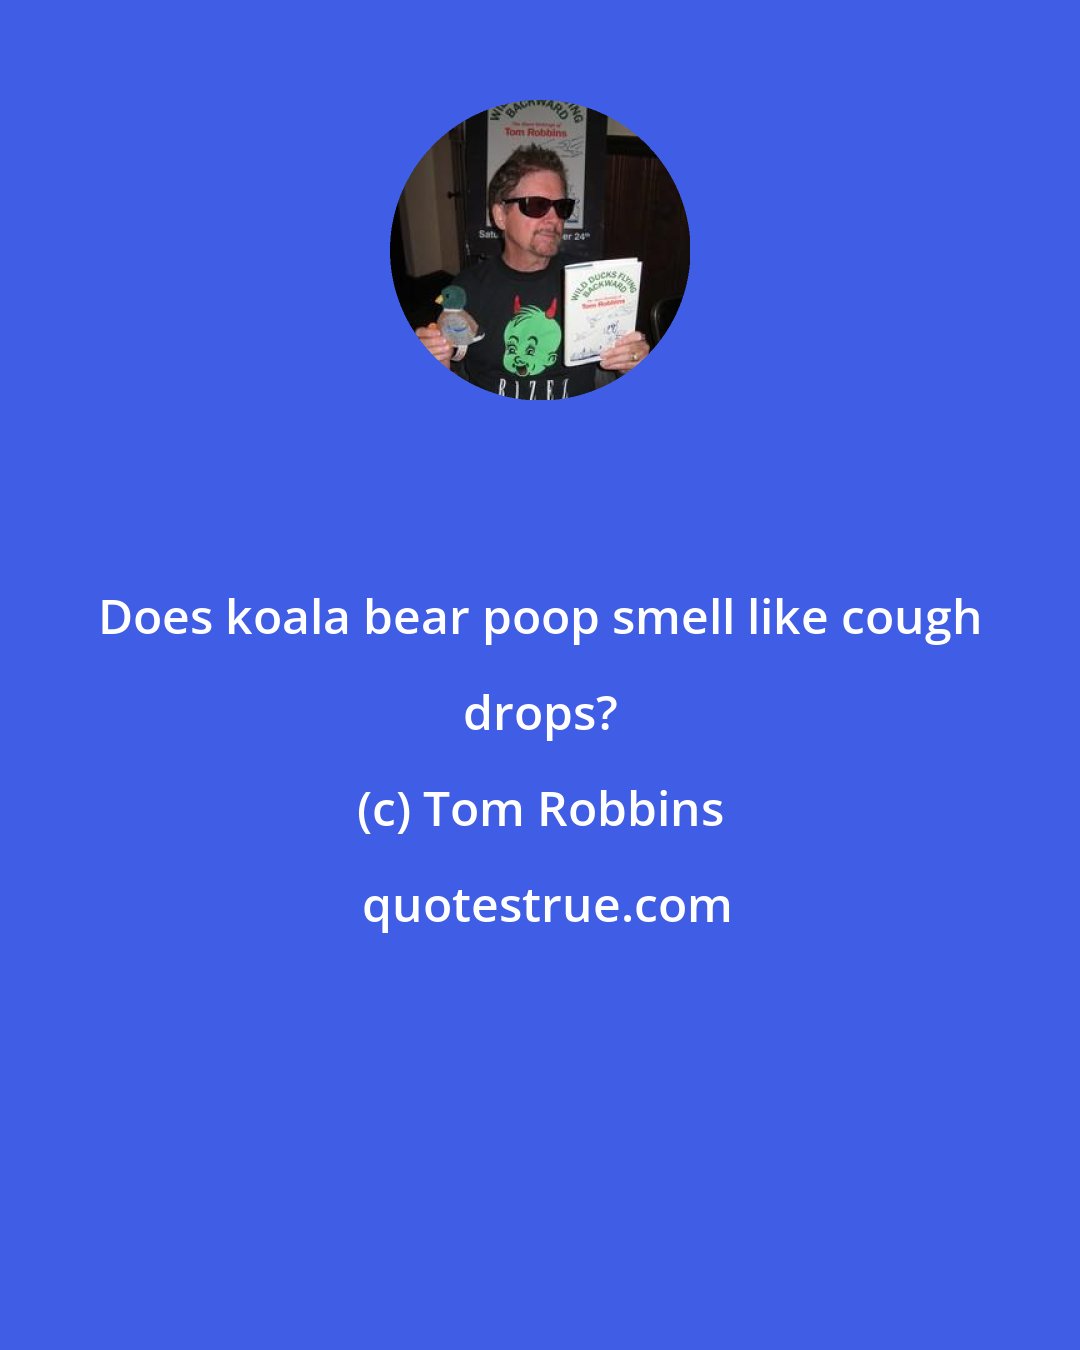 Tom Robbins: Does koala bear poop smell like cough drops?